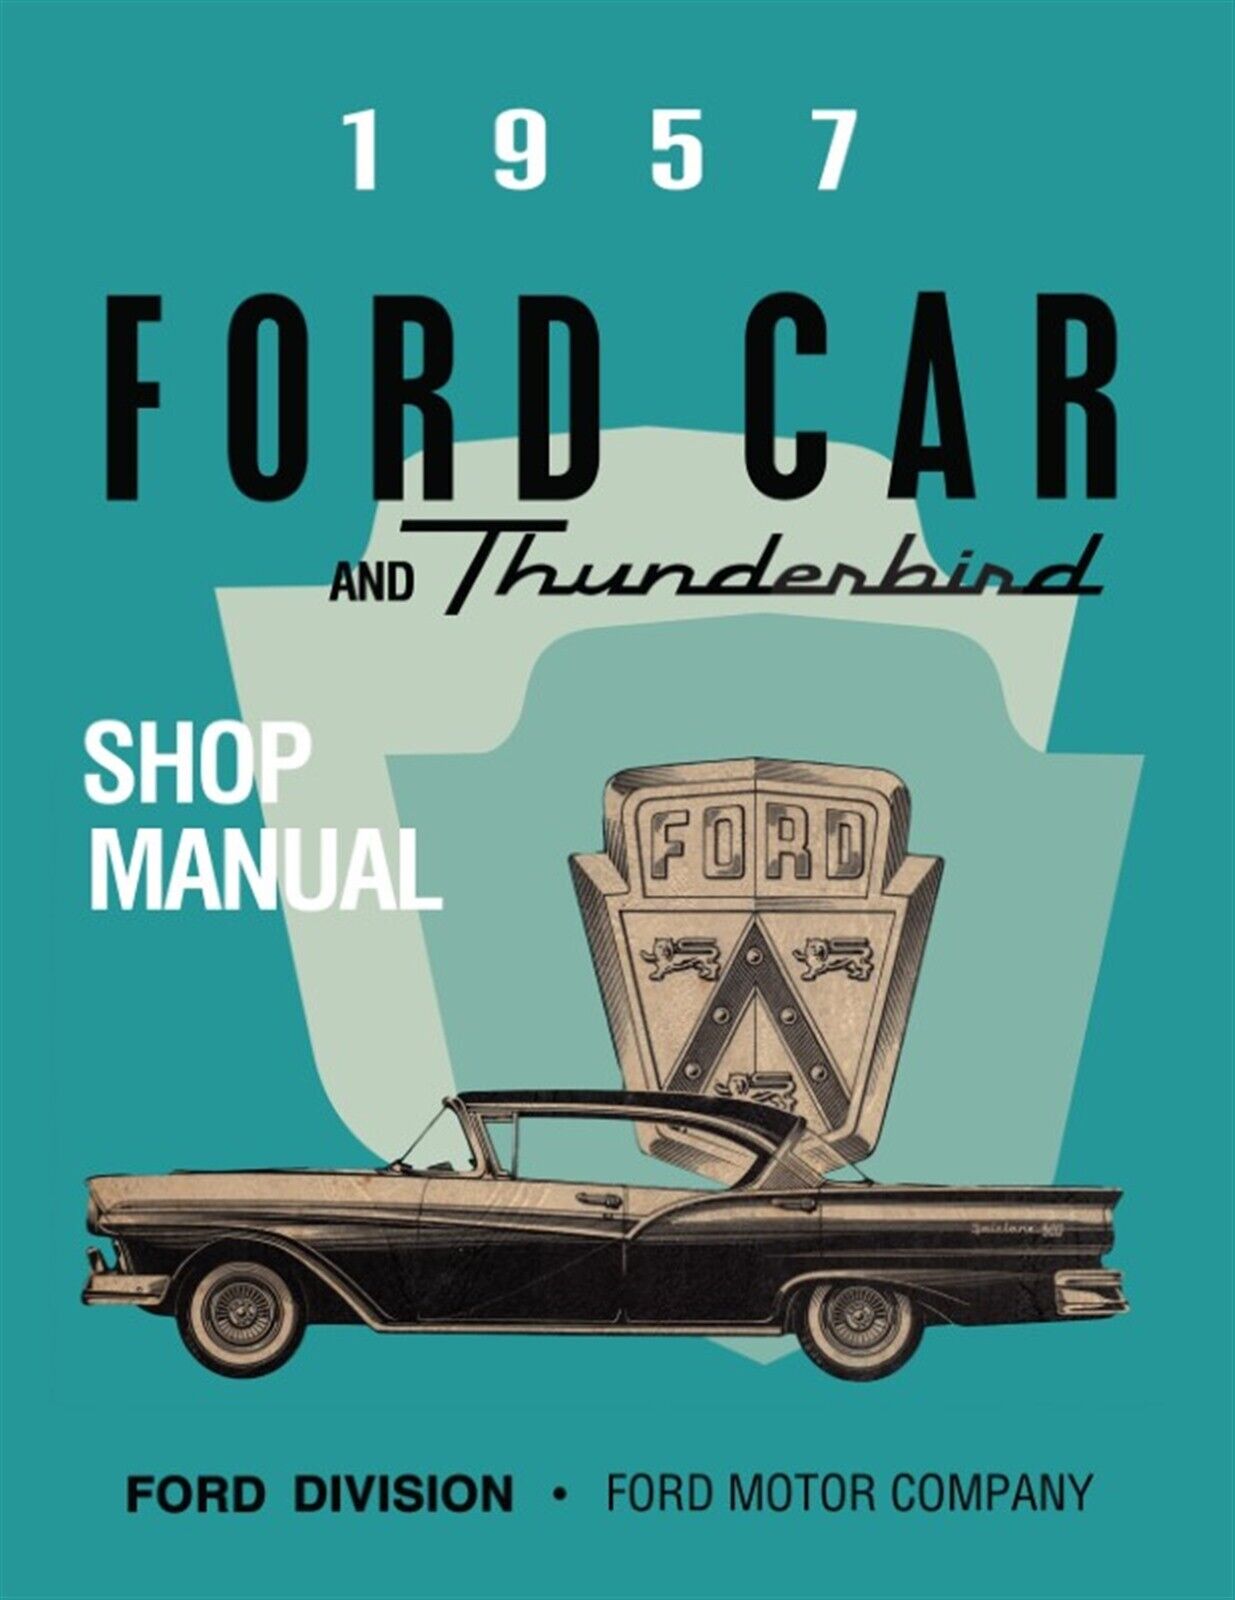 1957 Ford Cars & Thunderbird Shop Manual